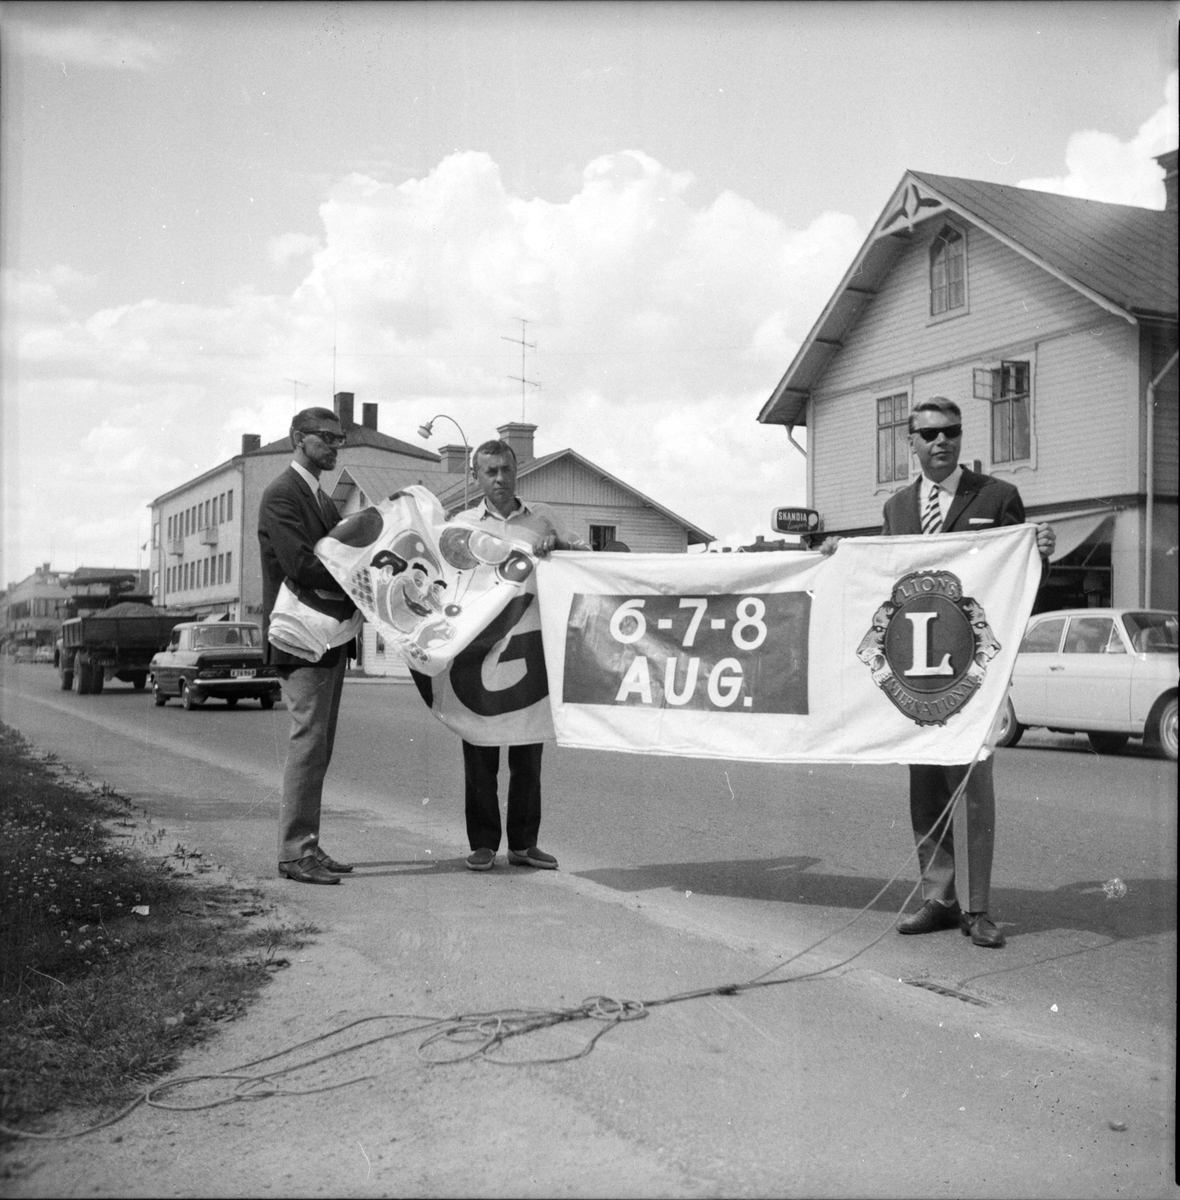 Y-H Lägret i Häggersta,
23 Juli 1965